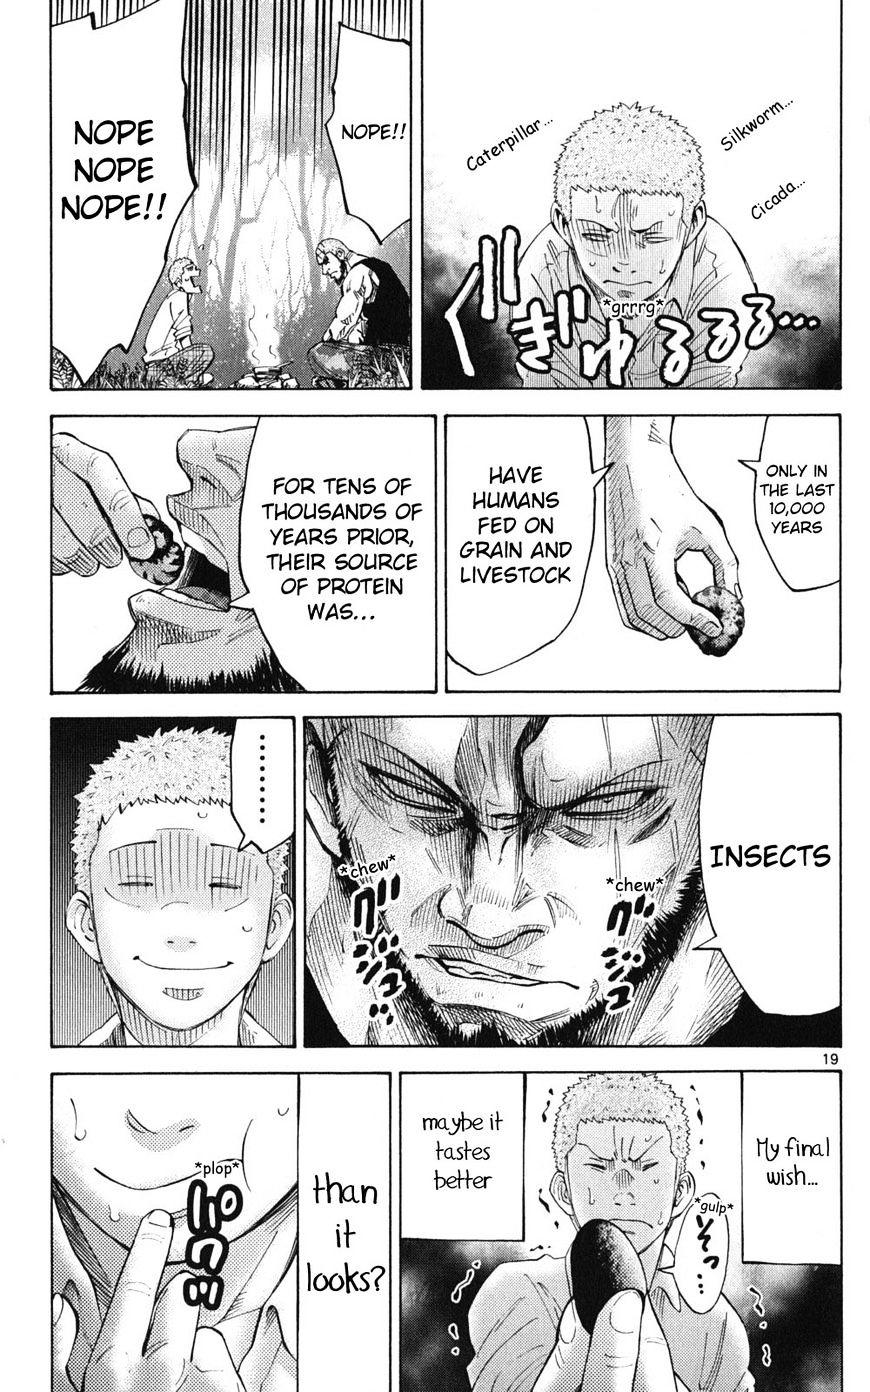 Imawa No Kuni No Alice Chapter 49.2 : Side Story 5 - King Of Spades (2) page 19 - Mangakakalot